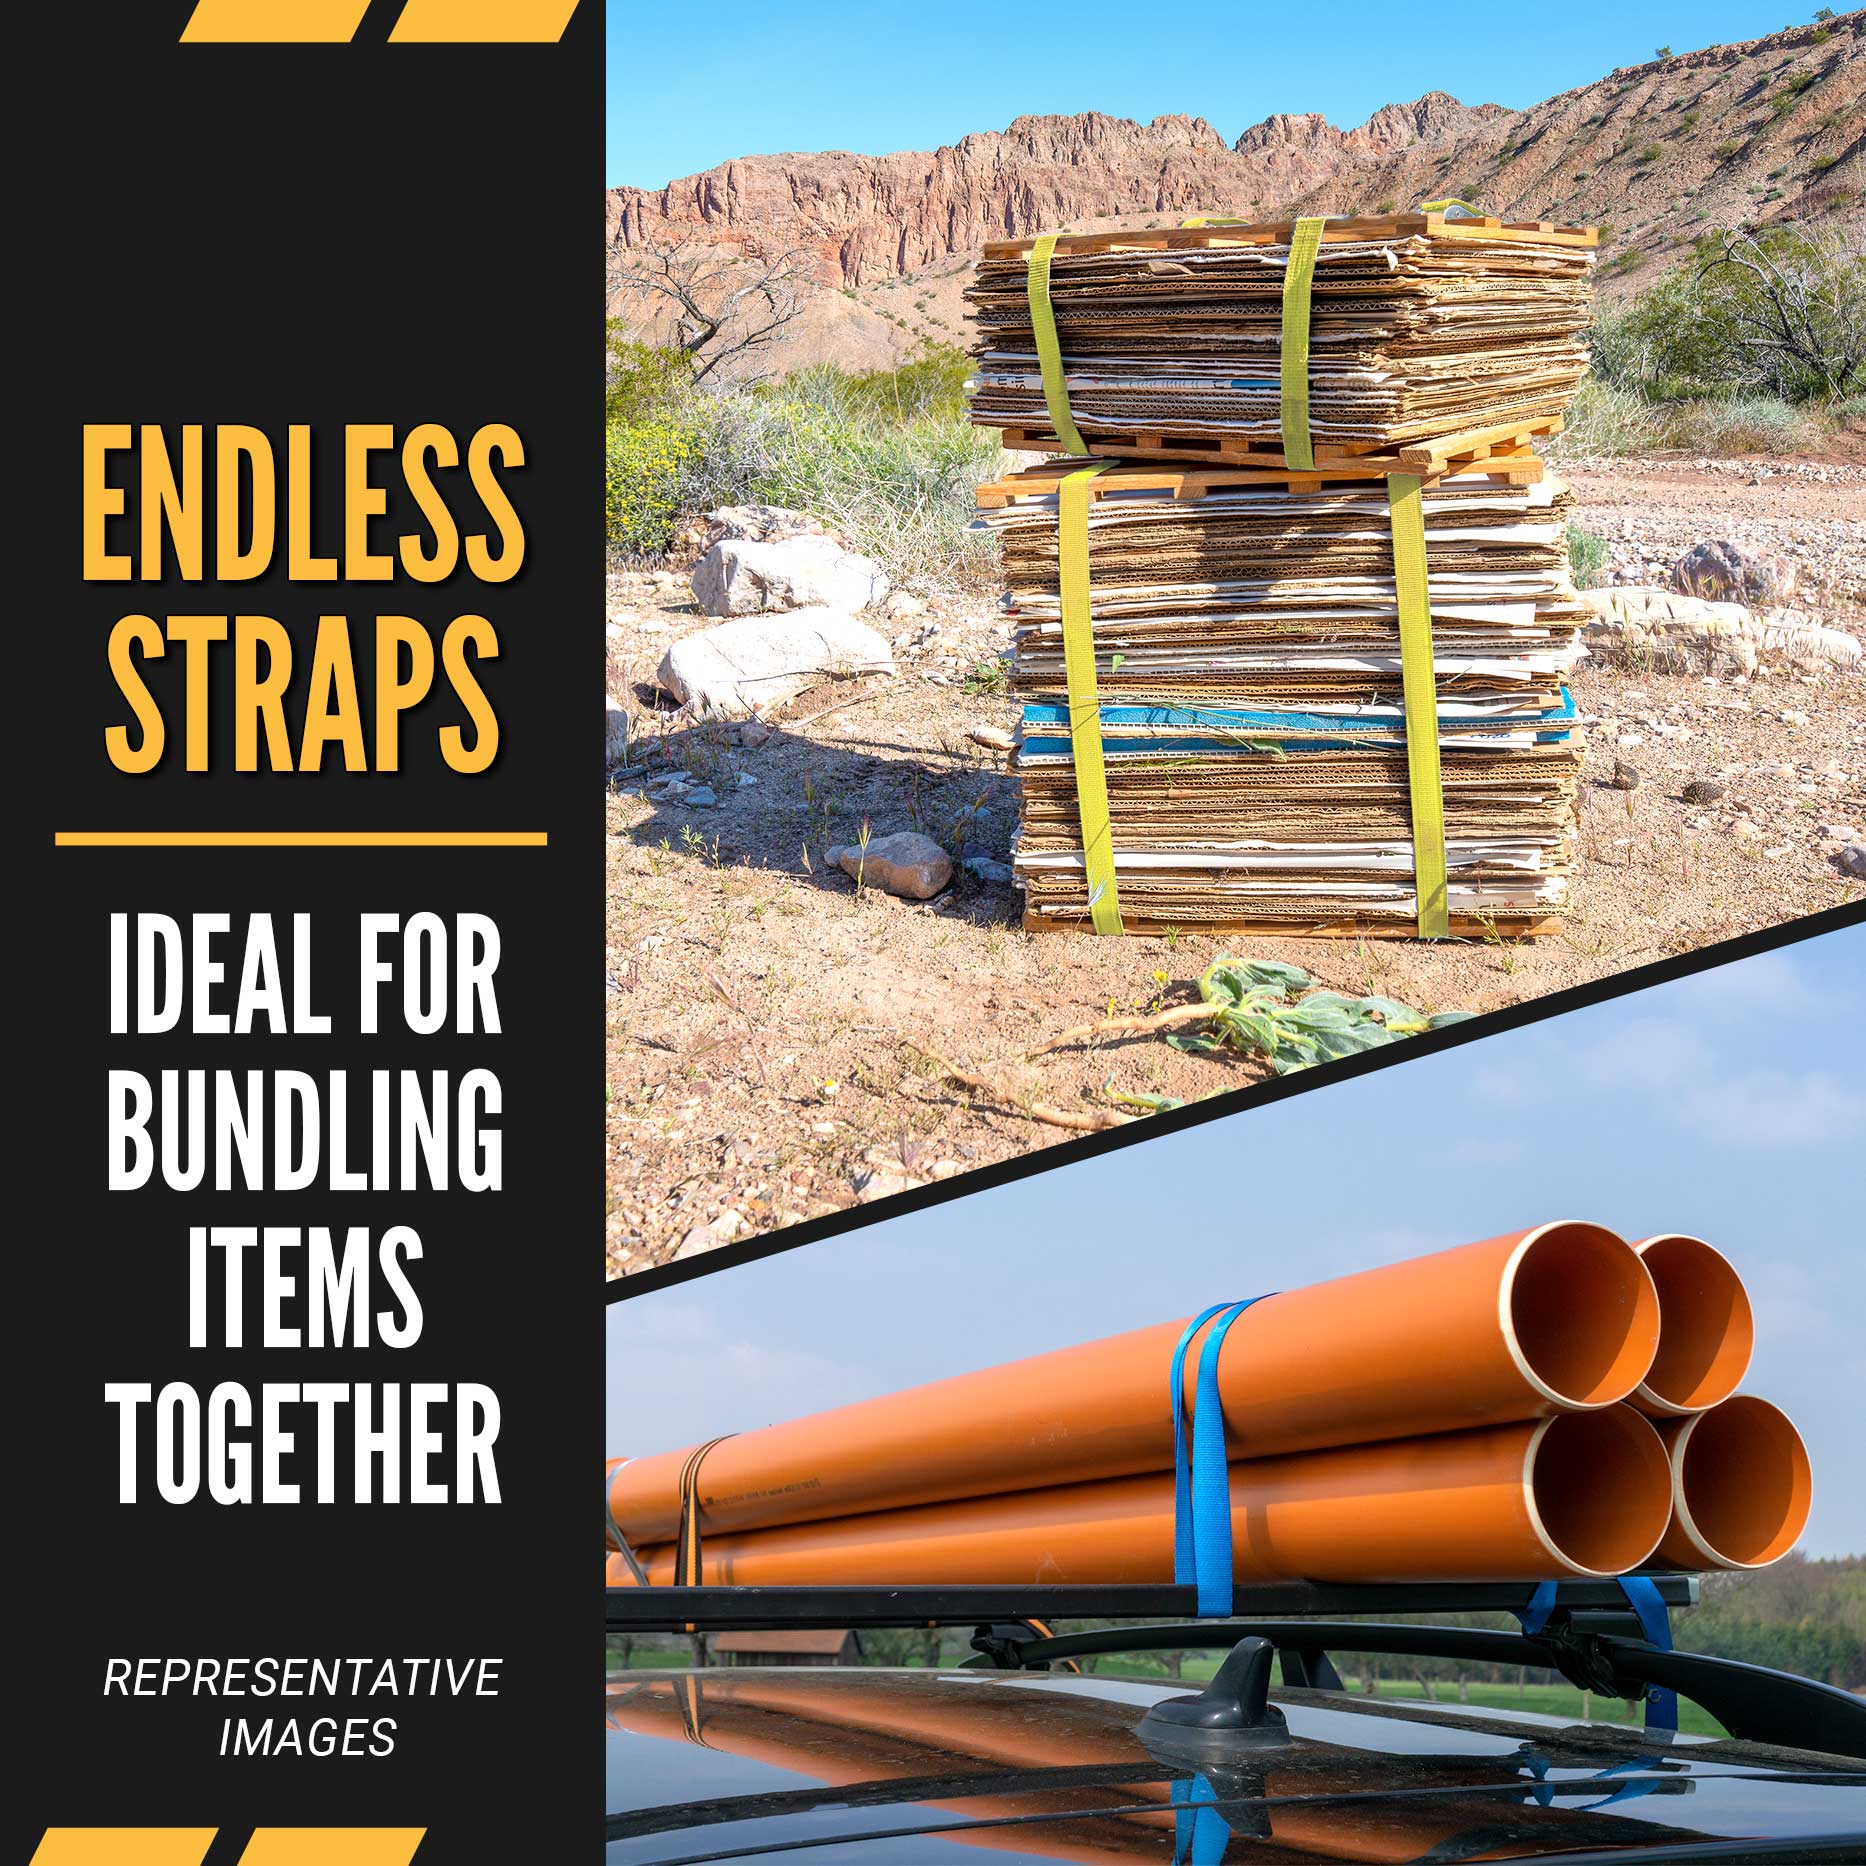 15' endless ratchet strap -  endless straps are ideal for bundling items together